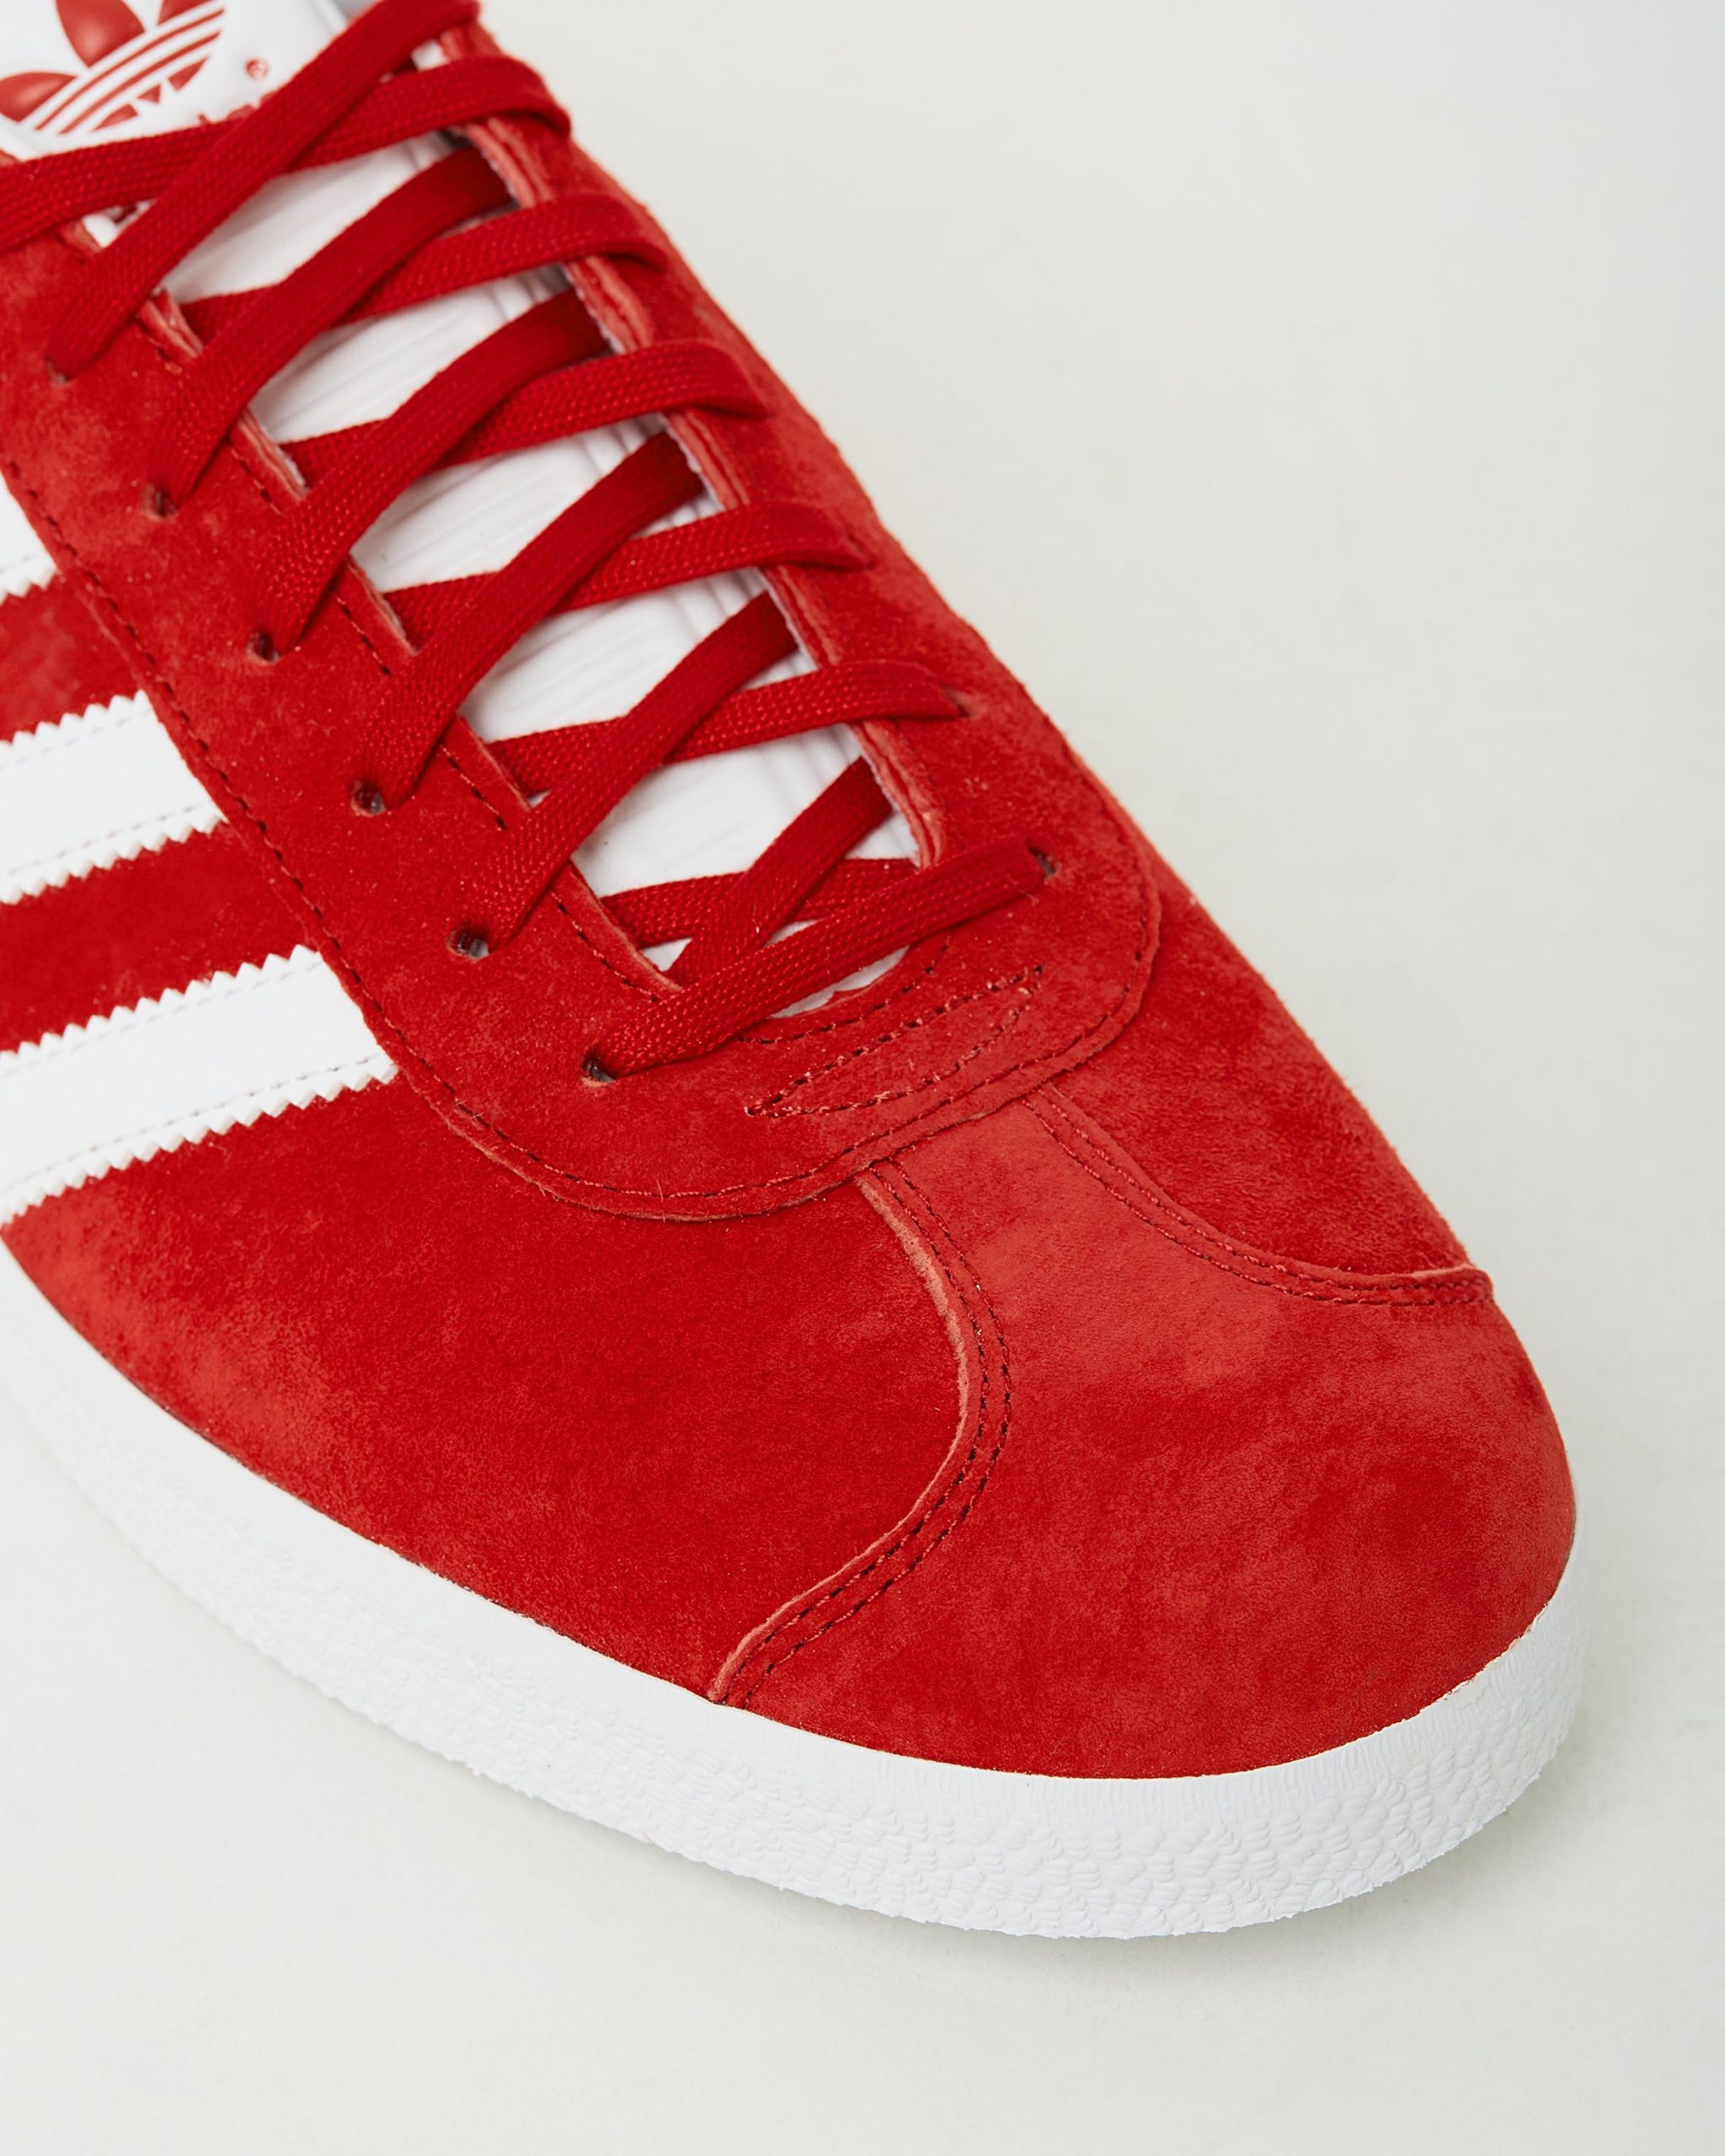 Adidas Men's Gazelle Power Red Sneakers 